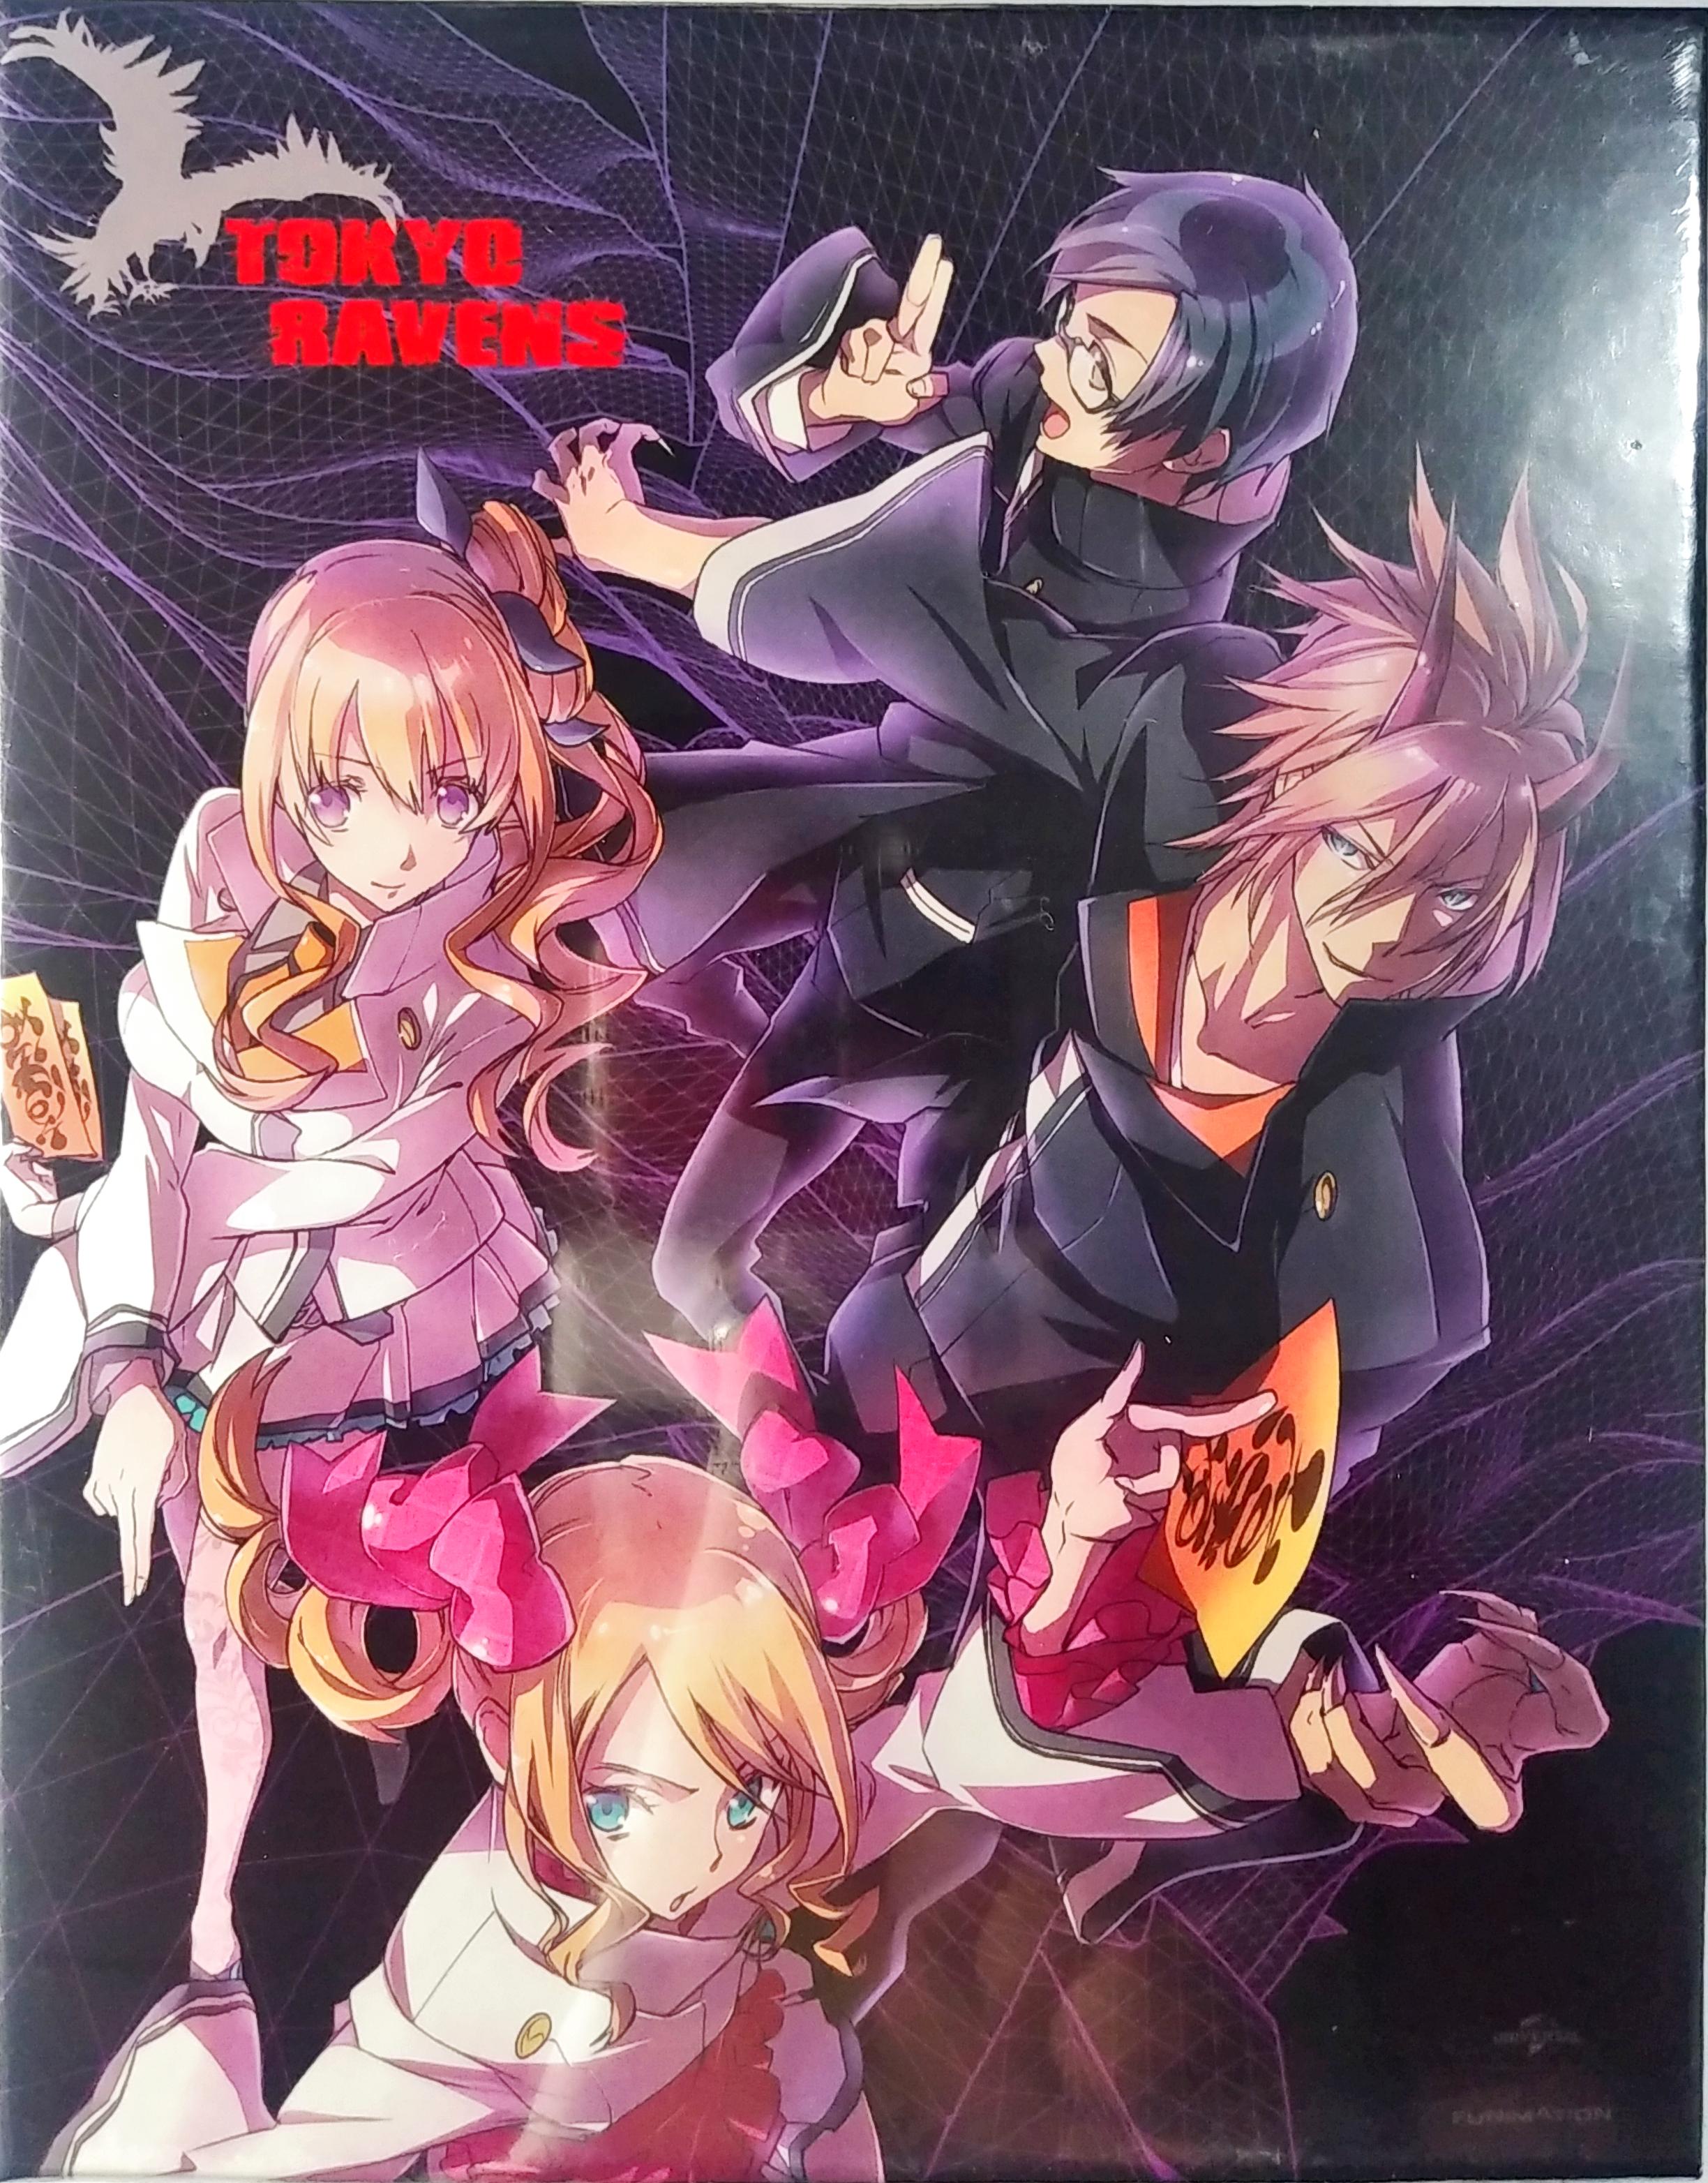 YESASIA: Tokyo Ravens Vol.2 (Blu-ray) (First Press Limited Edition)(Japan  Version) Blu-ray - Hanazawa Kana, , Geneon Universal Entertainment - Anime  in Japanese - Free Shipping - North America Site